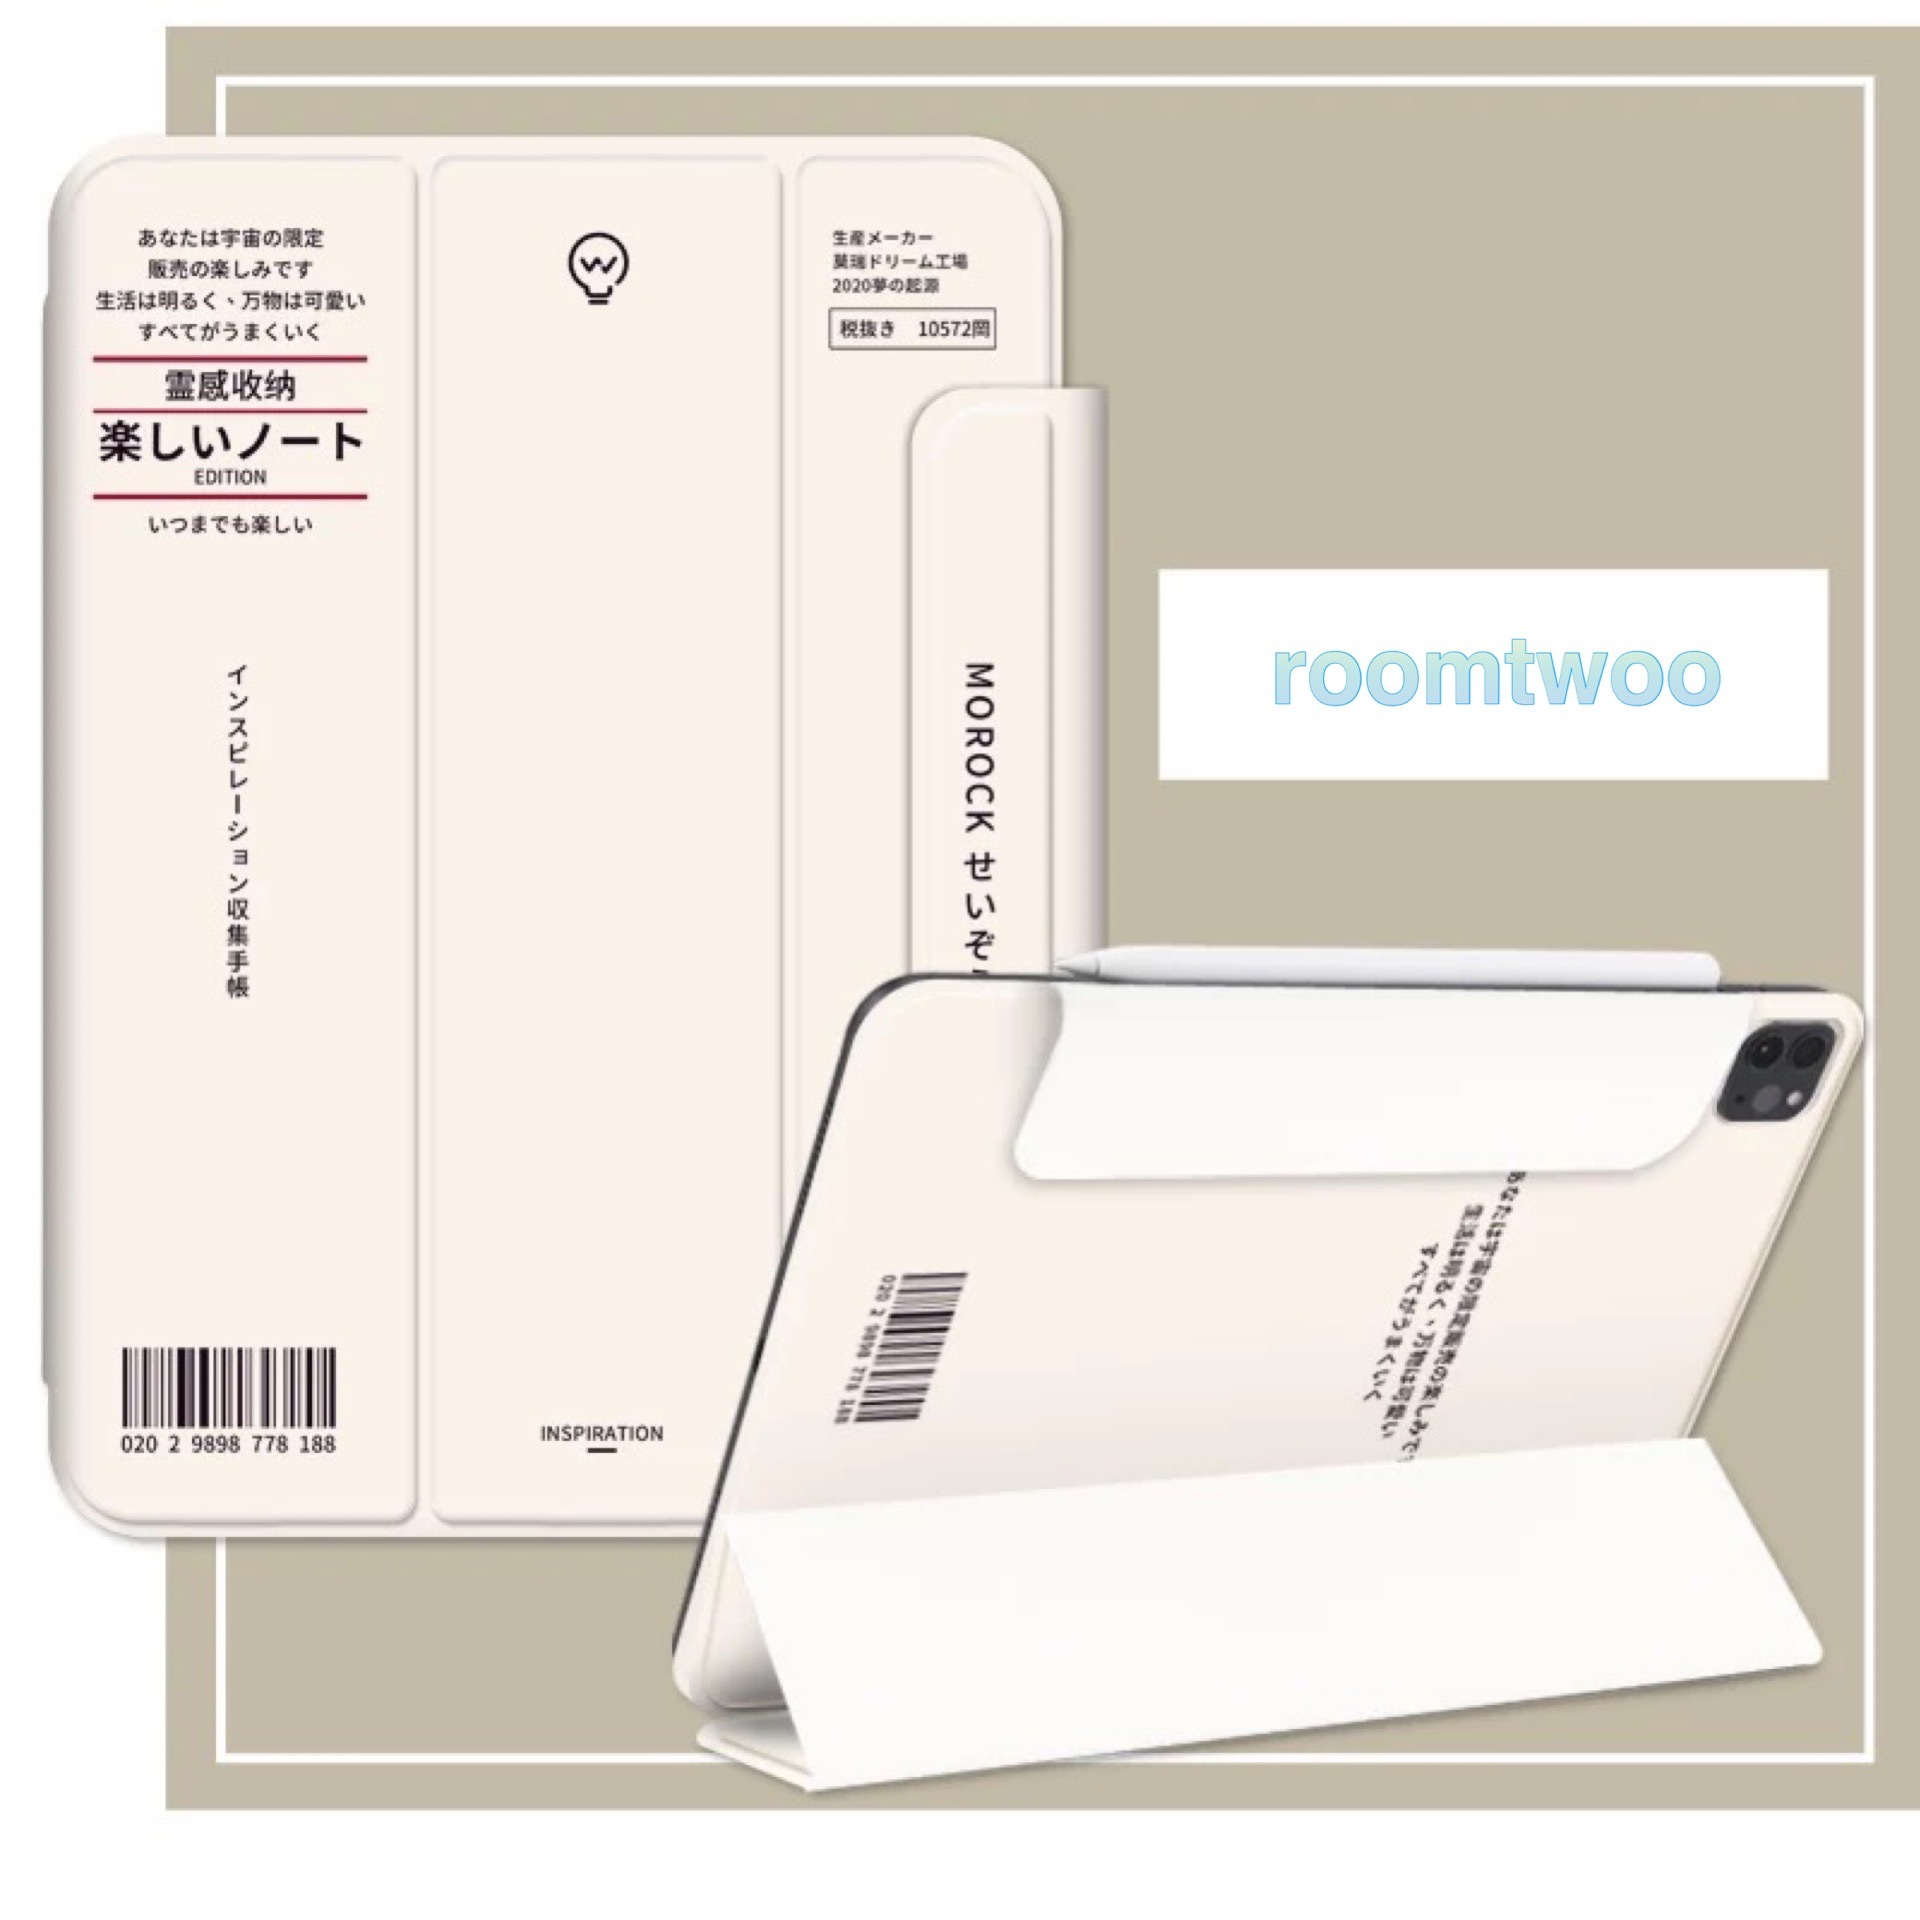 Muji Style iPad Case – Room Twoo